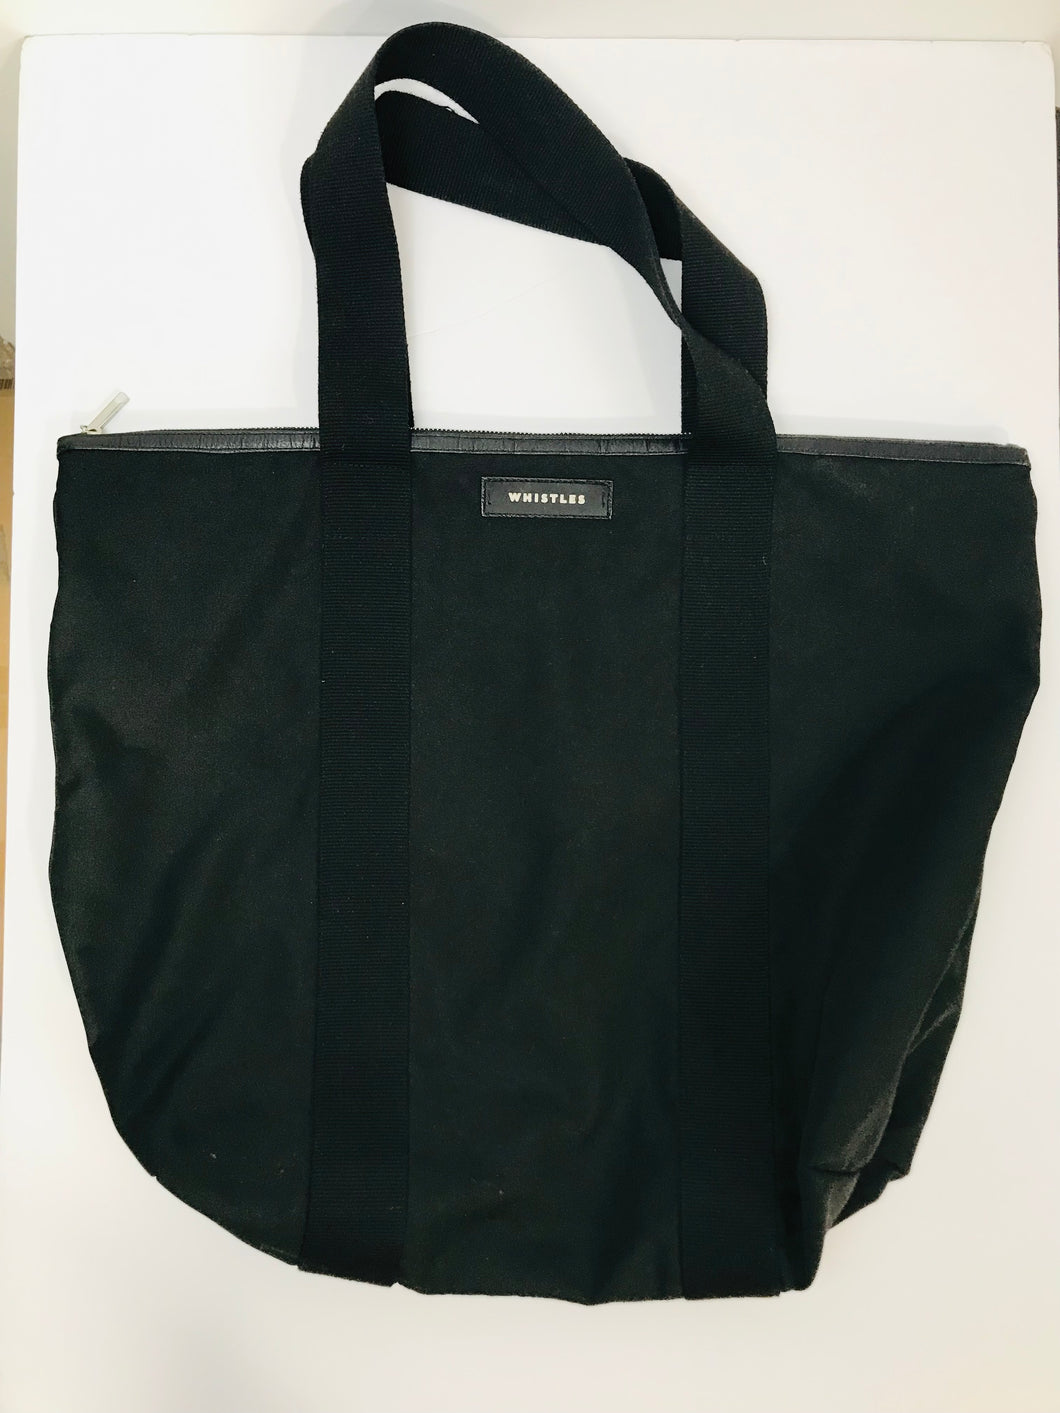 Whistles Women's Tote Bag | Large | Black